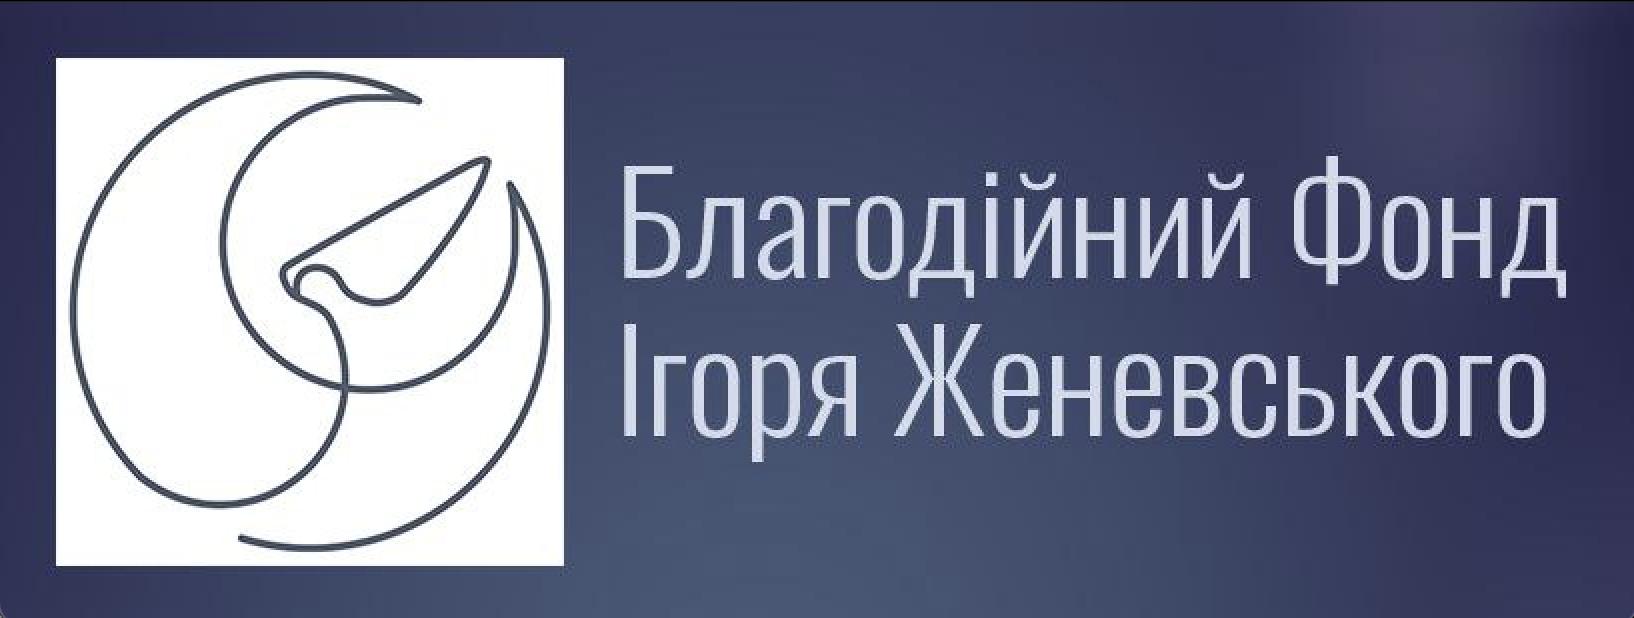 Igor Jenevskiy fond logo